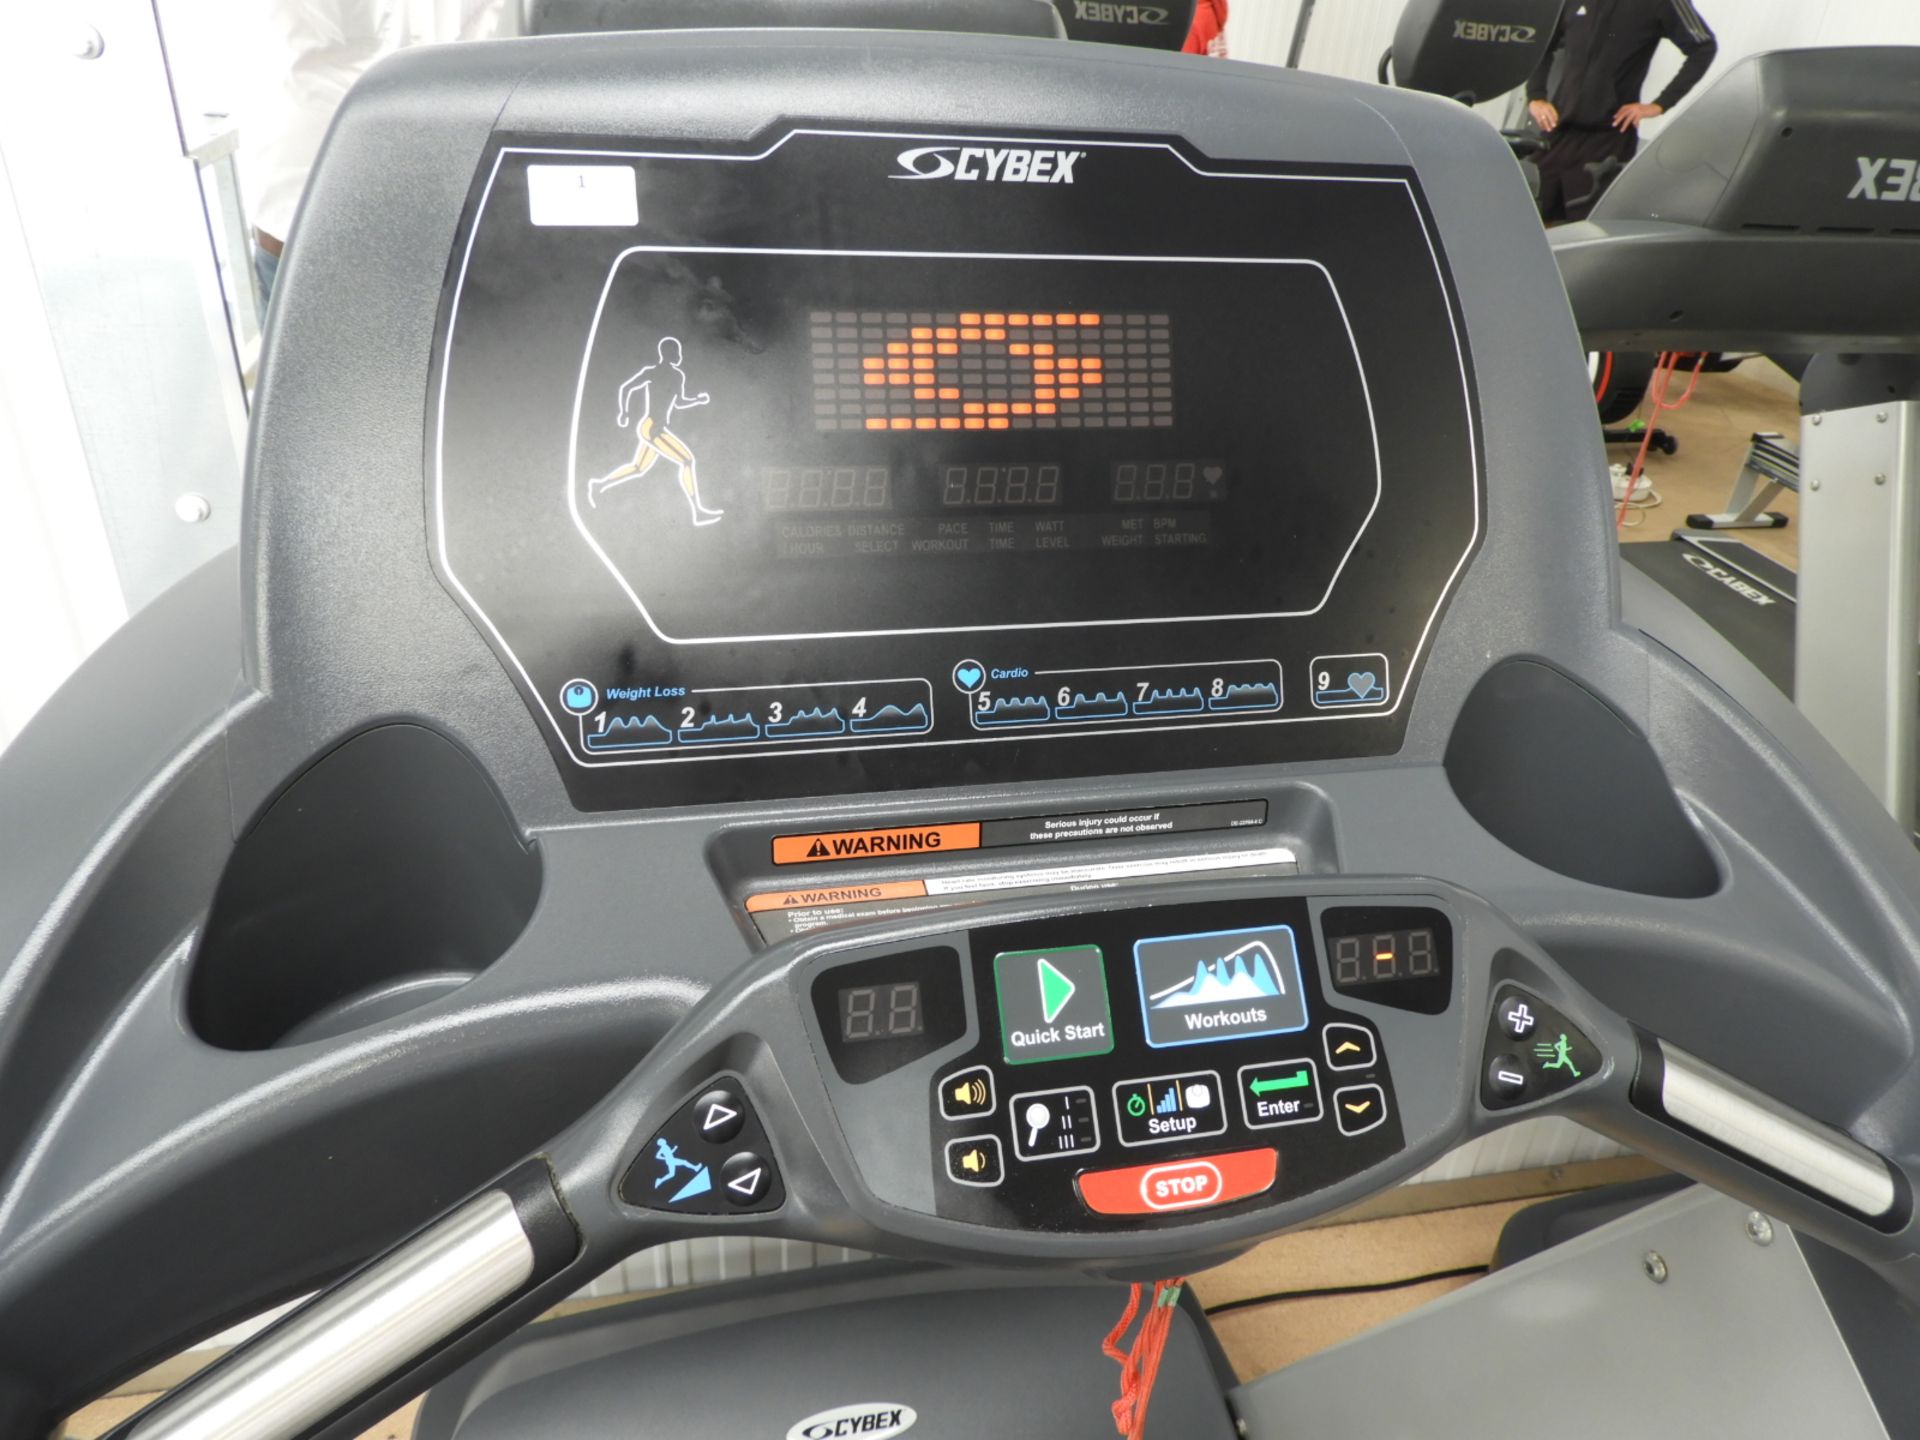 *Cybex 625T Intelligent Suspension Treadmill - Image 2 of 2